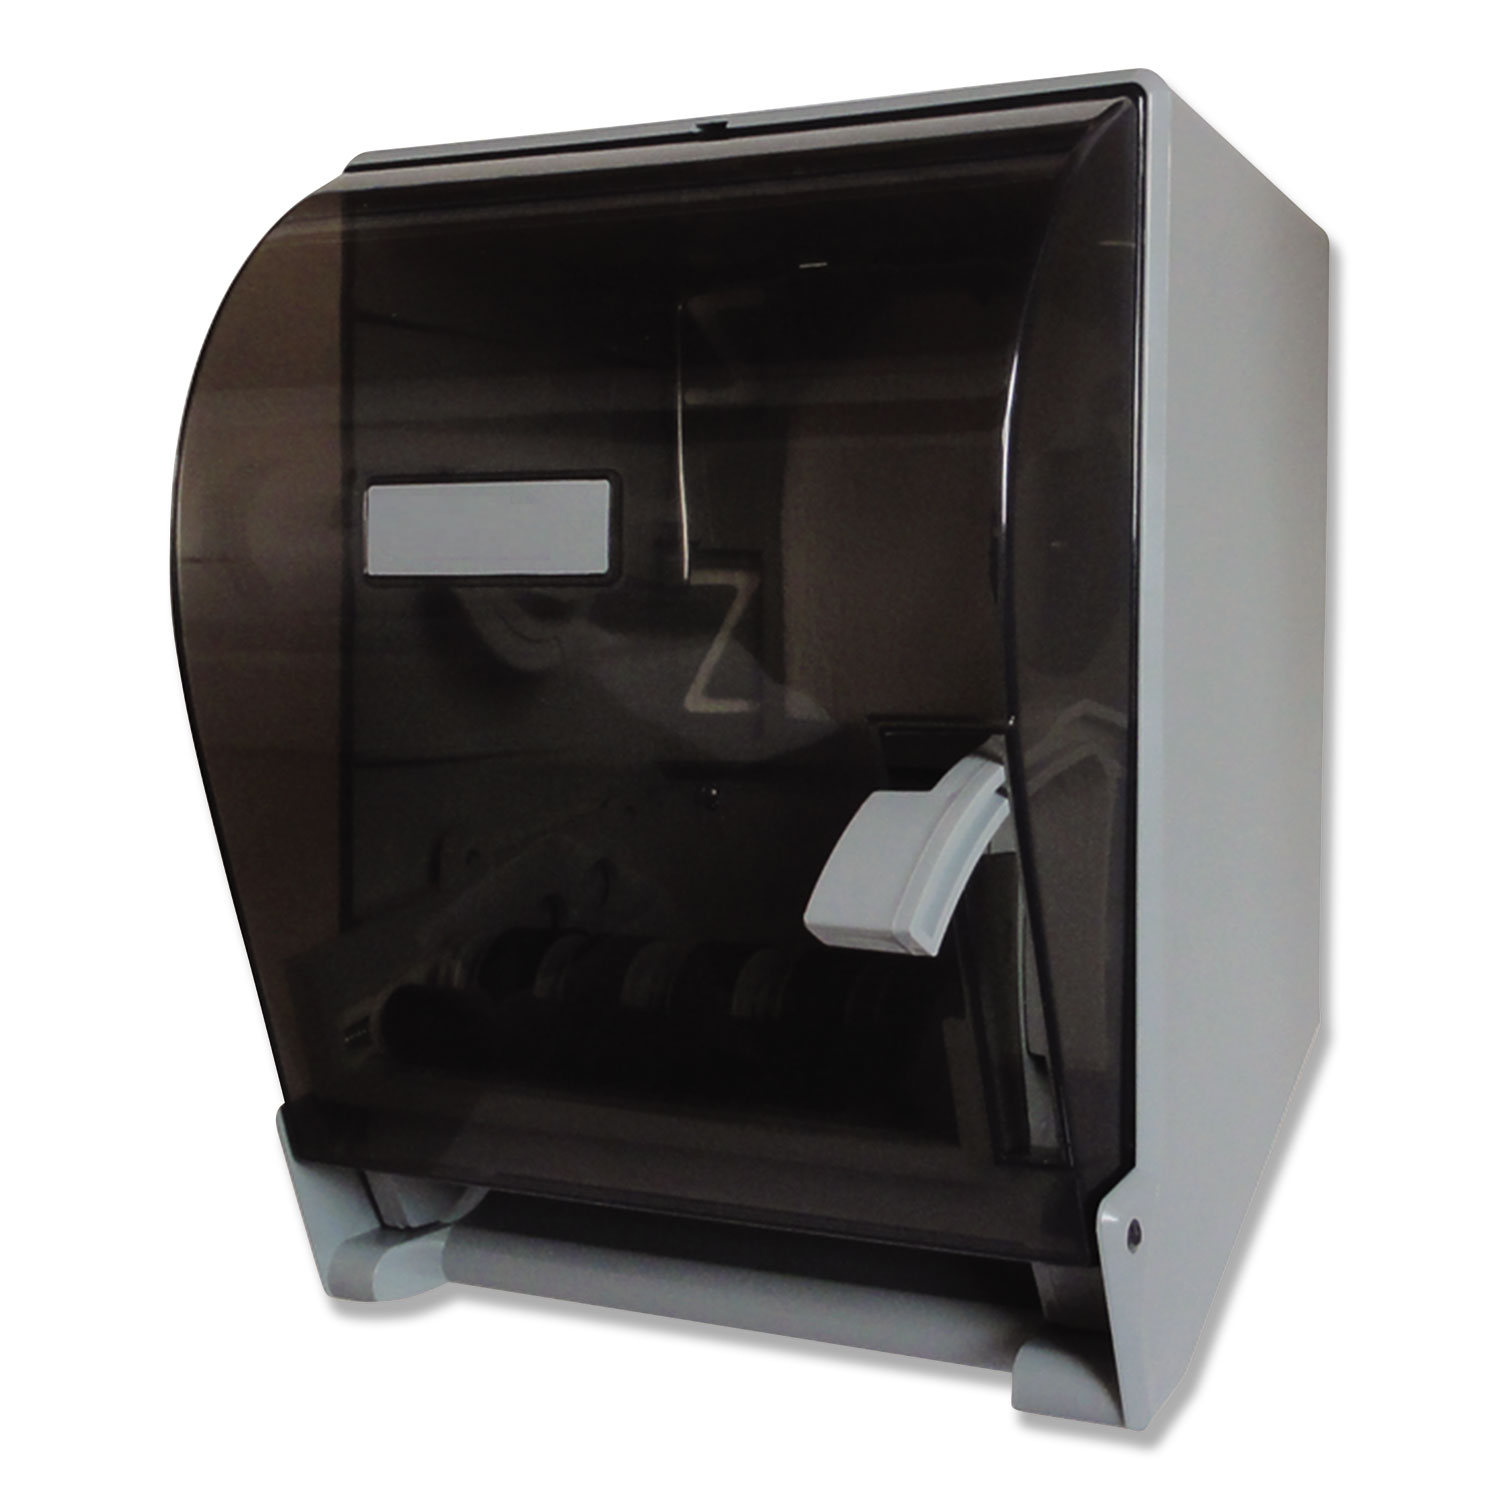  GEN 320-02 Lever Action Roll Towel Dispenser, 11 1/4 x 9 1/2 x 14 3/8, Transparent (GEN1605) 